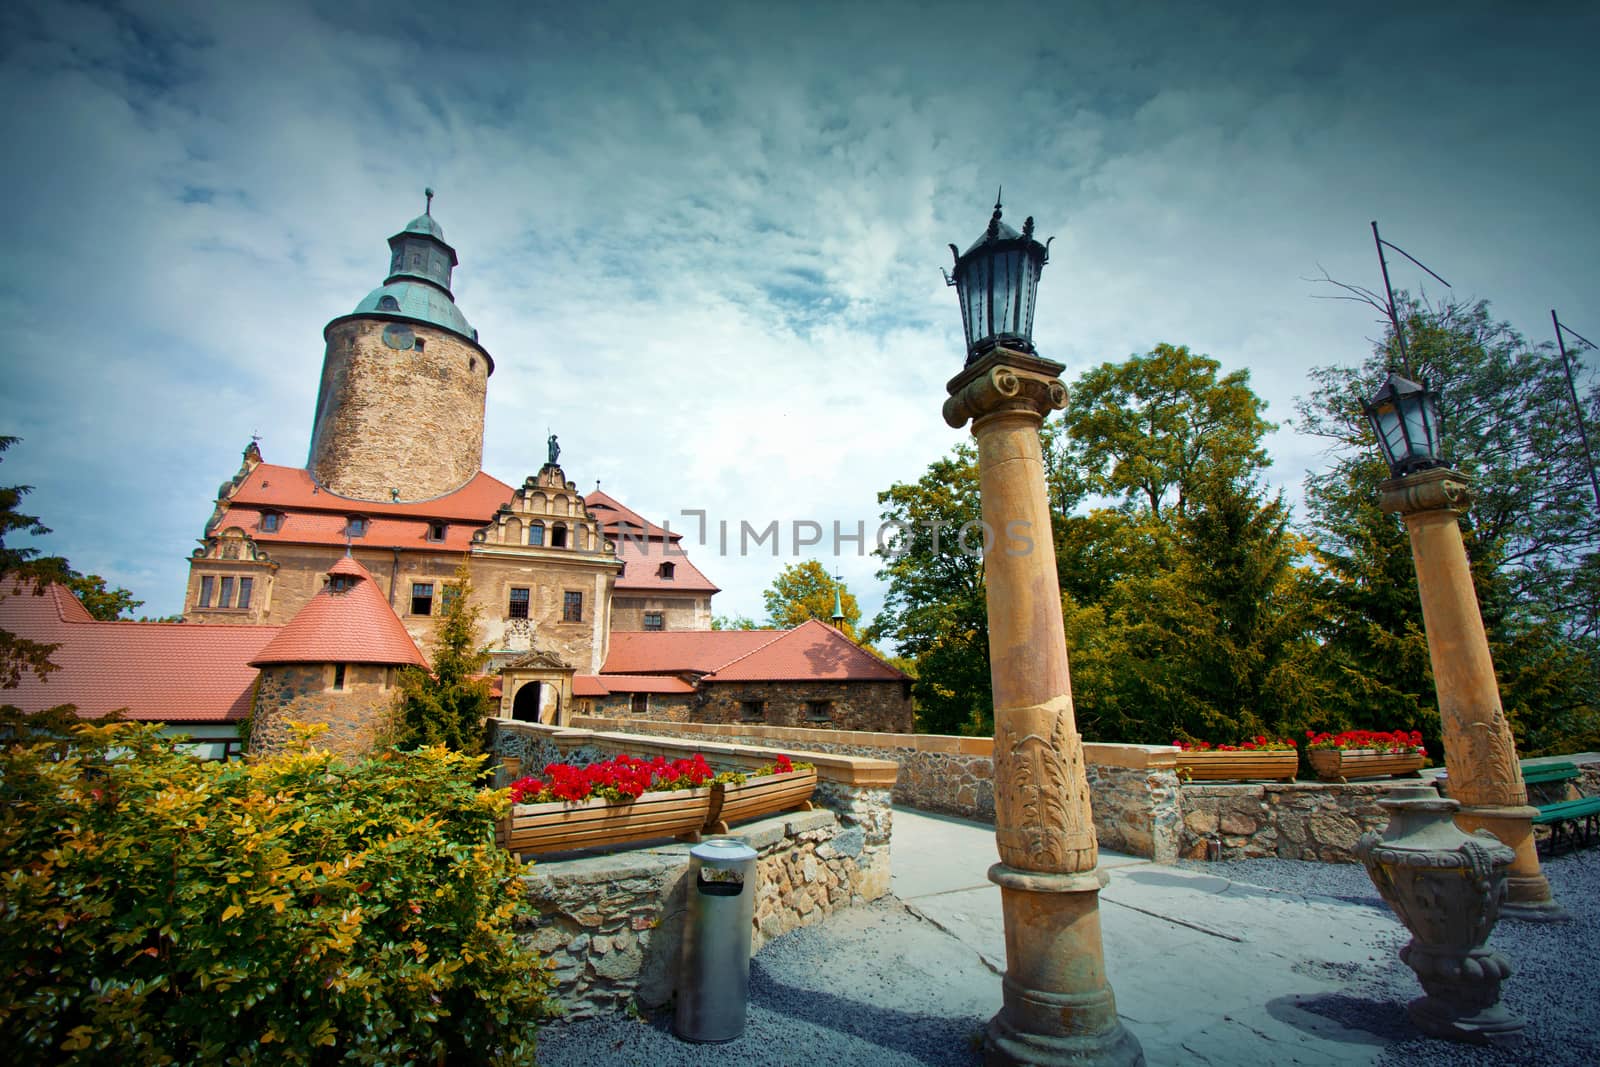 Czocha Castle in Poland.